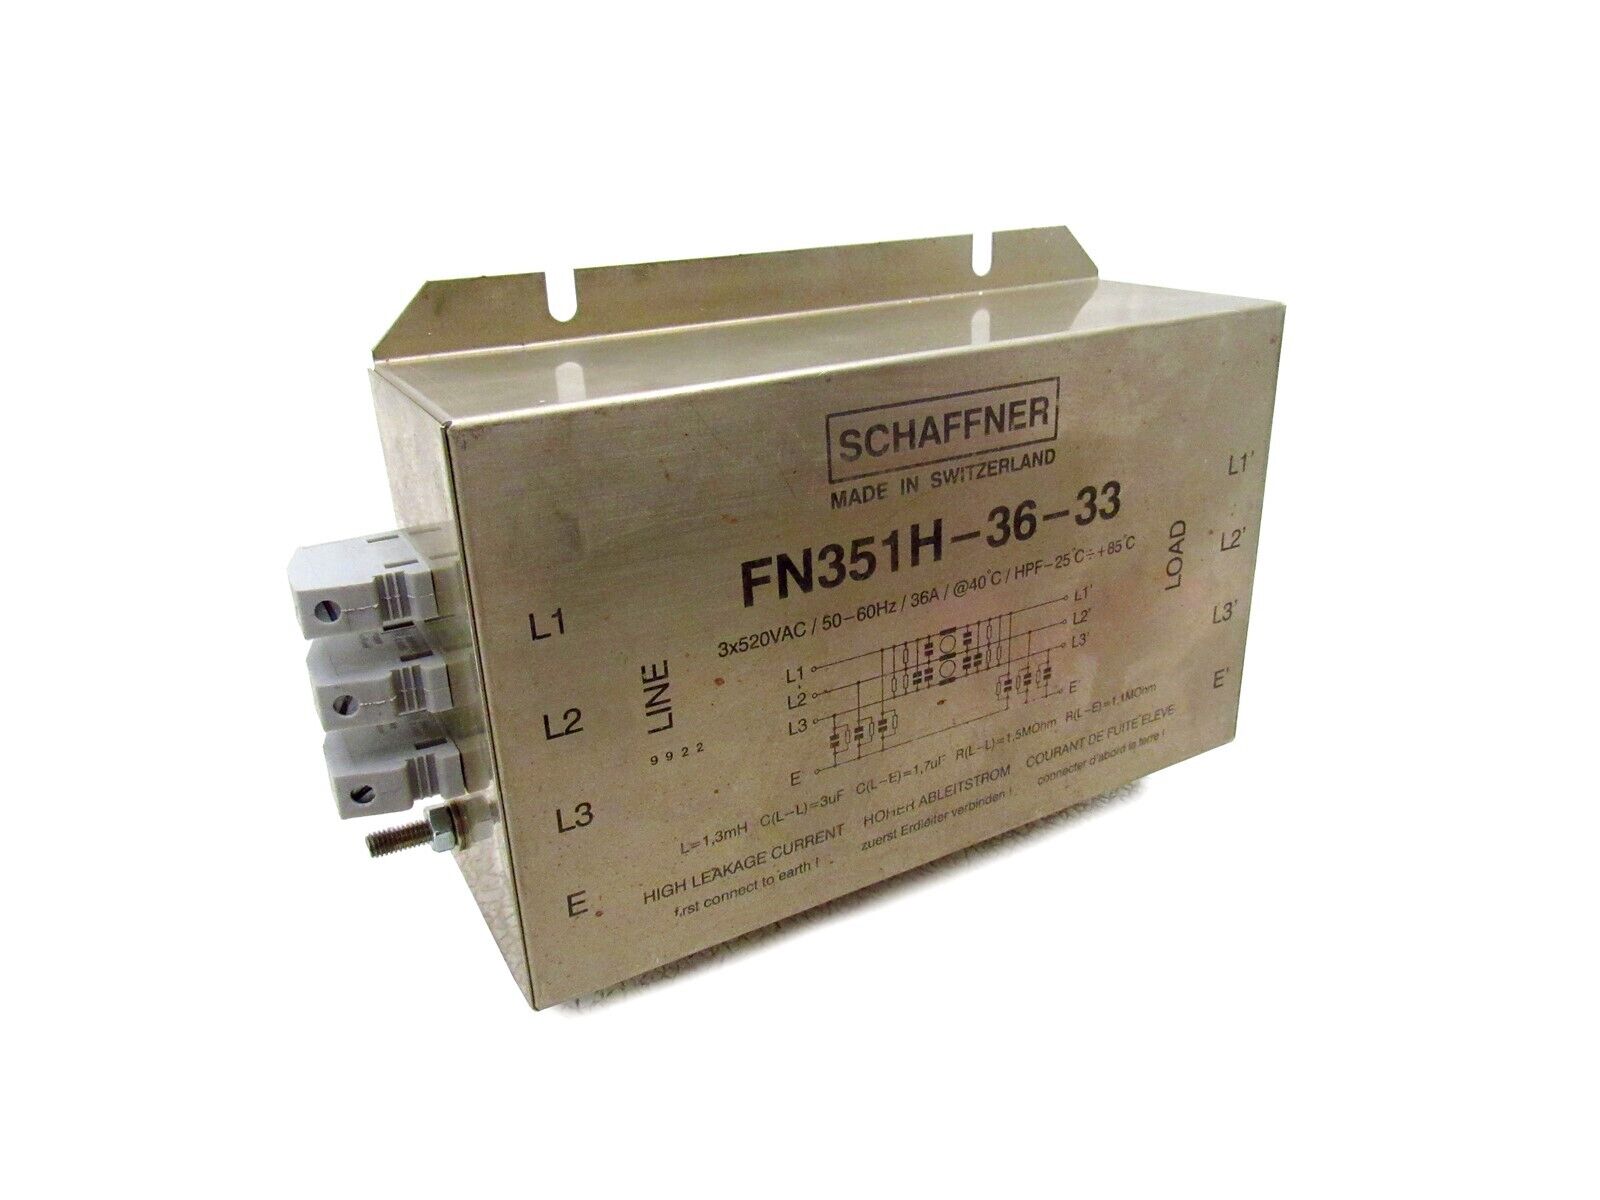 Schaffner Power Line Filter FN351H-36-33